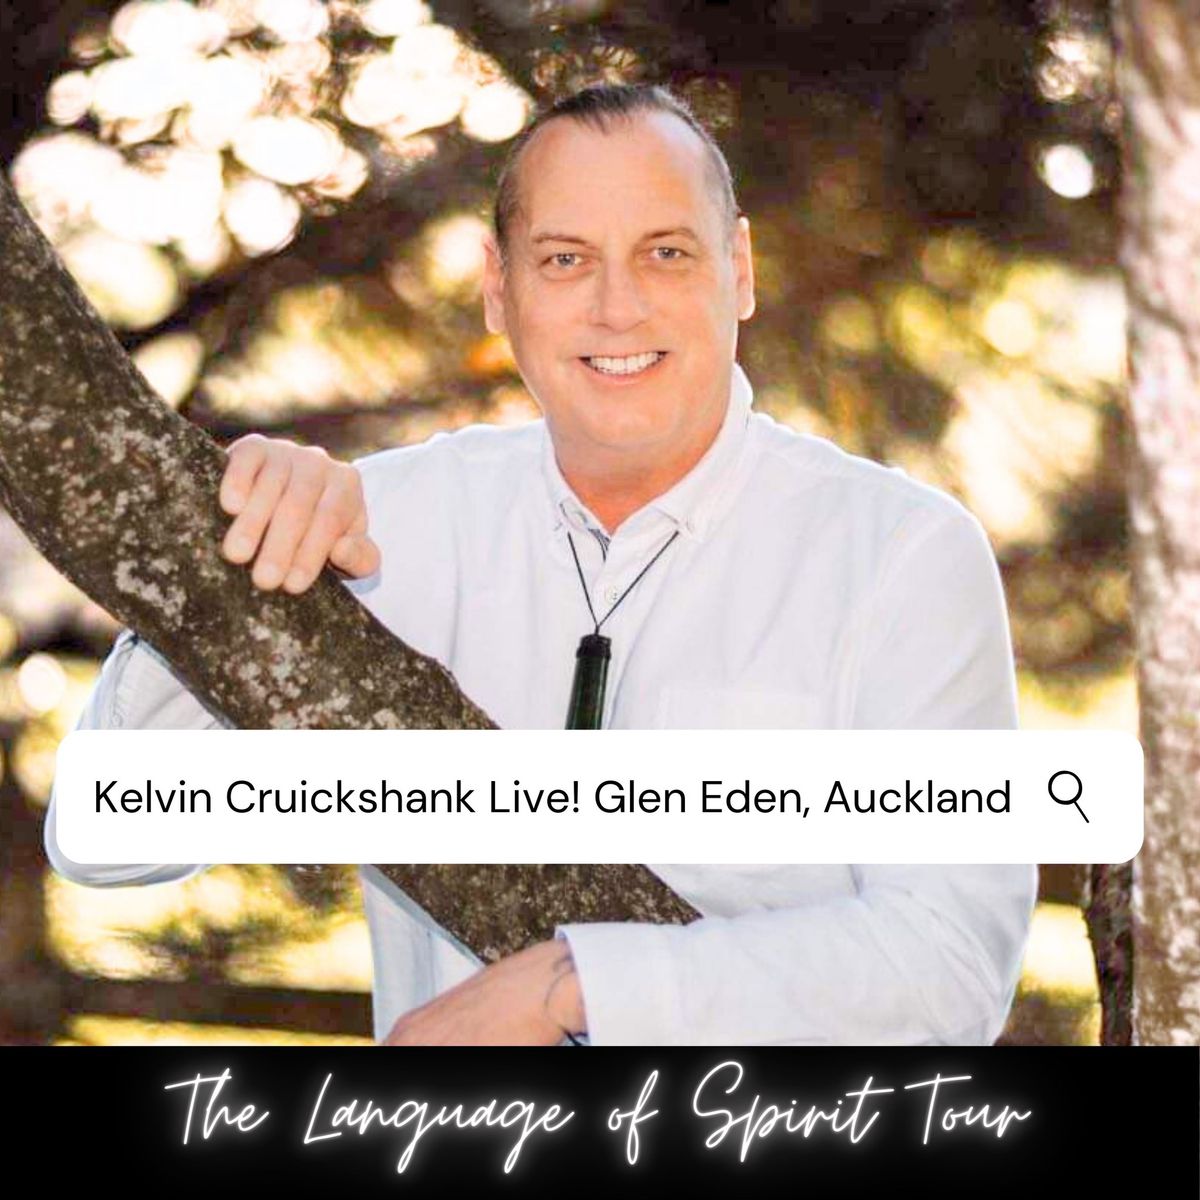 Kelvin Cruickshank Live -  "The Language of Spirit" Tour - GLEN EDEN, AUCKLAND SOLD OUT!